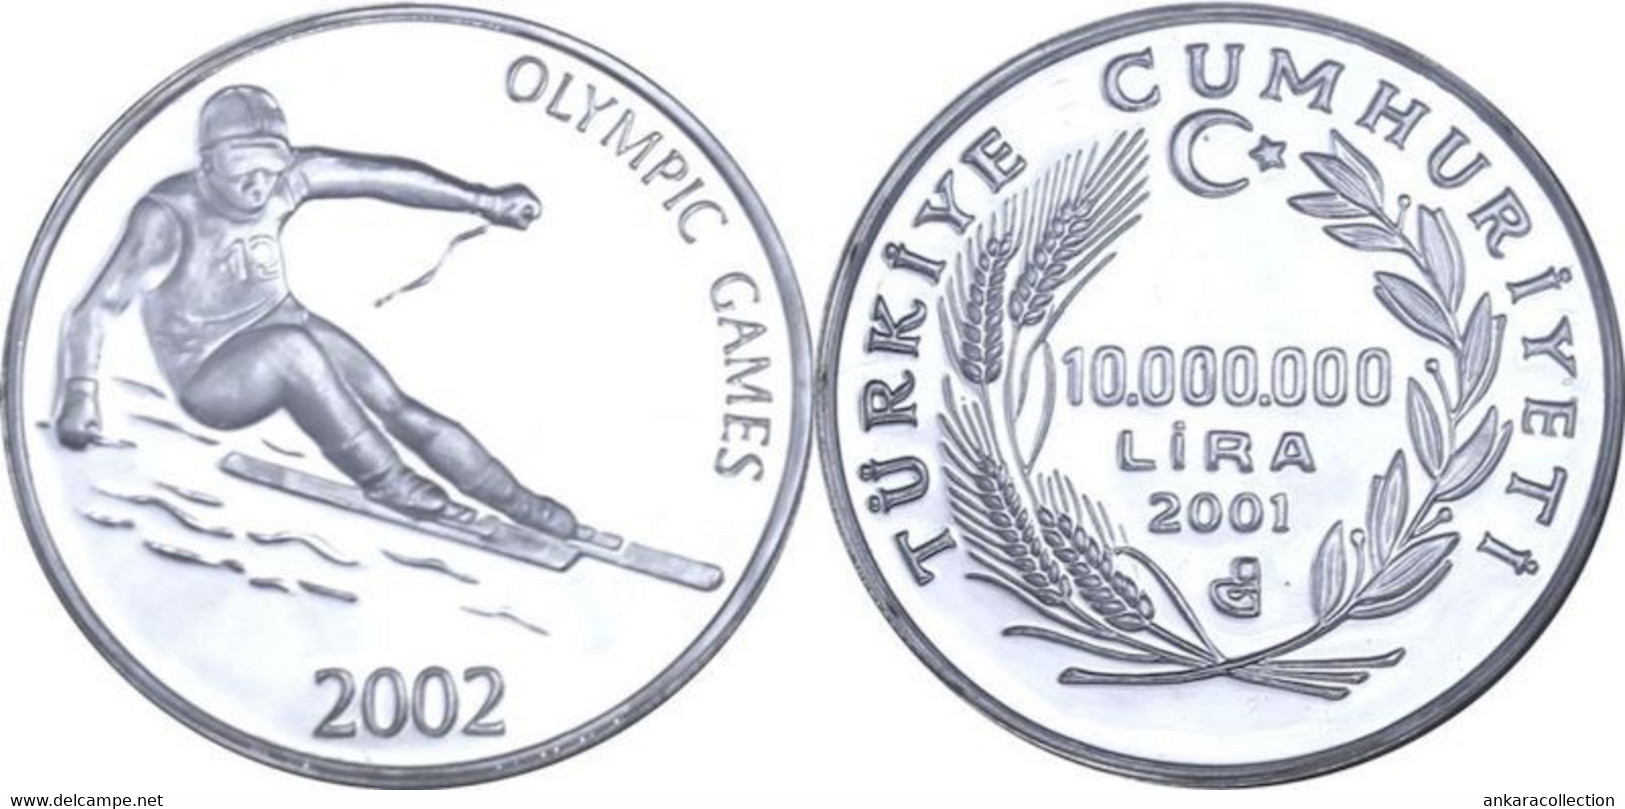 AC - SKI 2002 SALT LAKE WINTER OLYMPIC GAMES No#1 COMMEMORATIVE SILVER COIN TURKEY 2001 UNCIRCULATED  PROOF - Non Classés